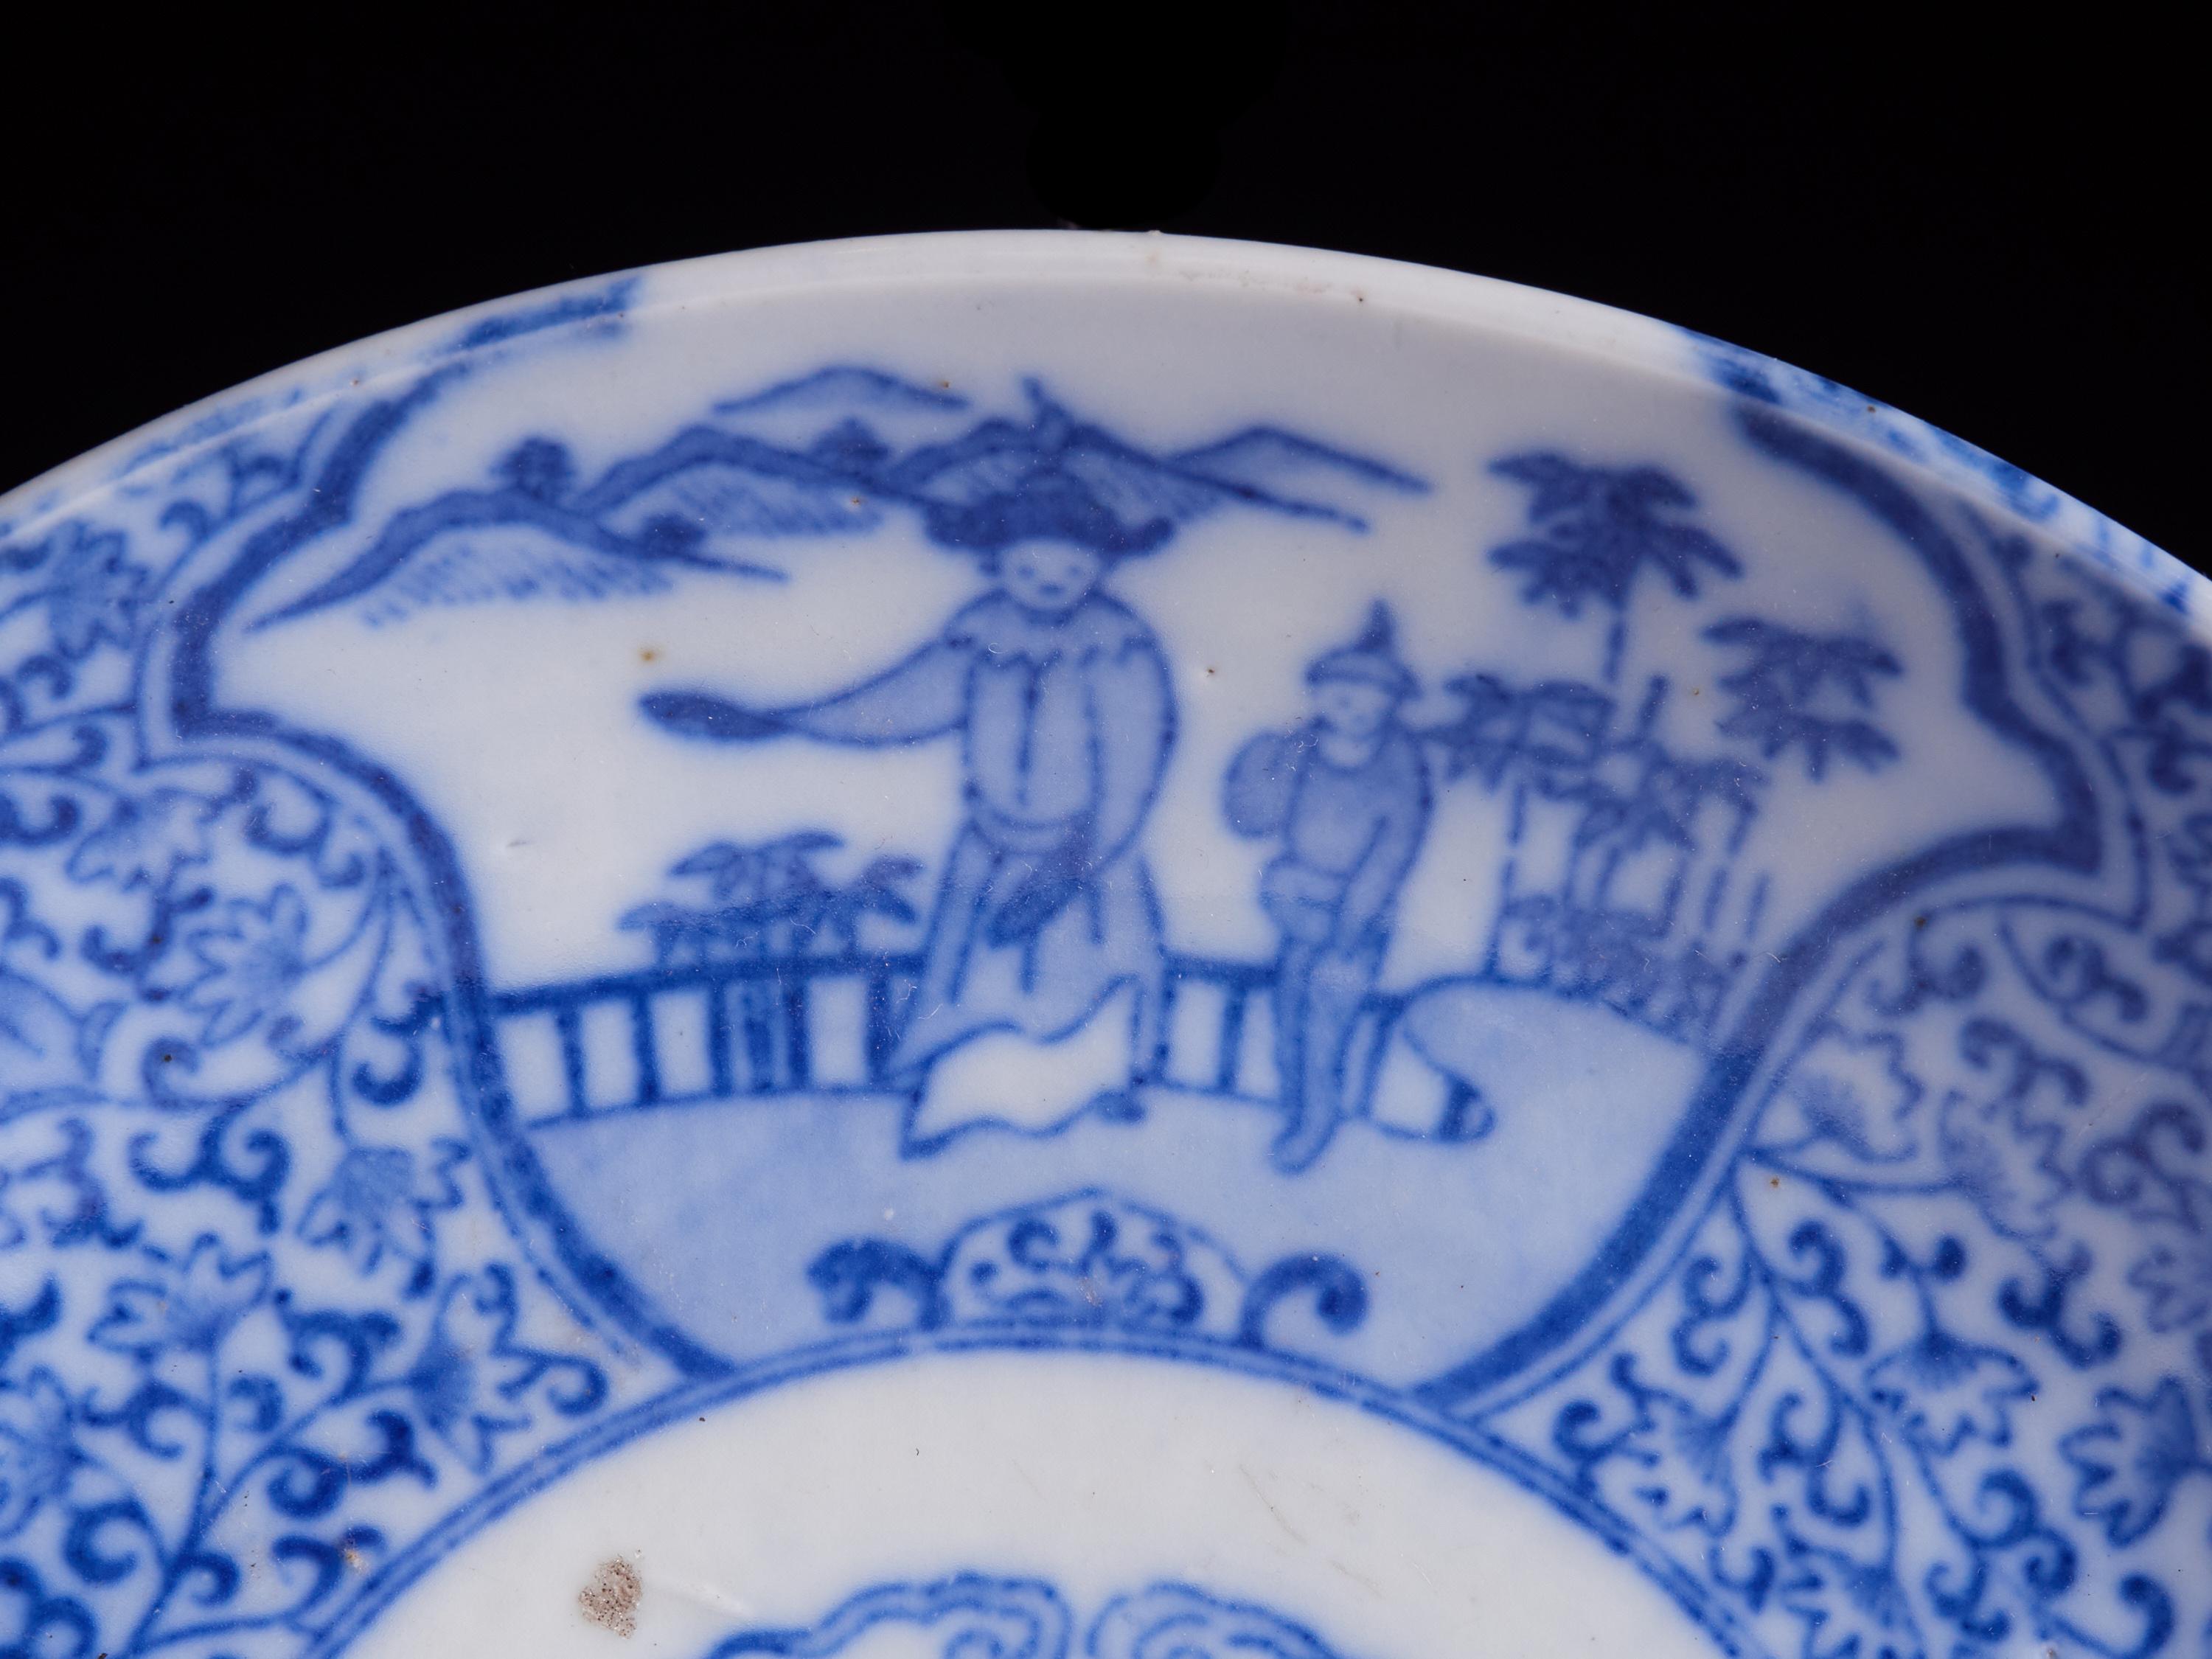 Stunning Set of 3 White Ceramic Plates with Ornate Indigo Blue Designs 5